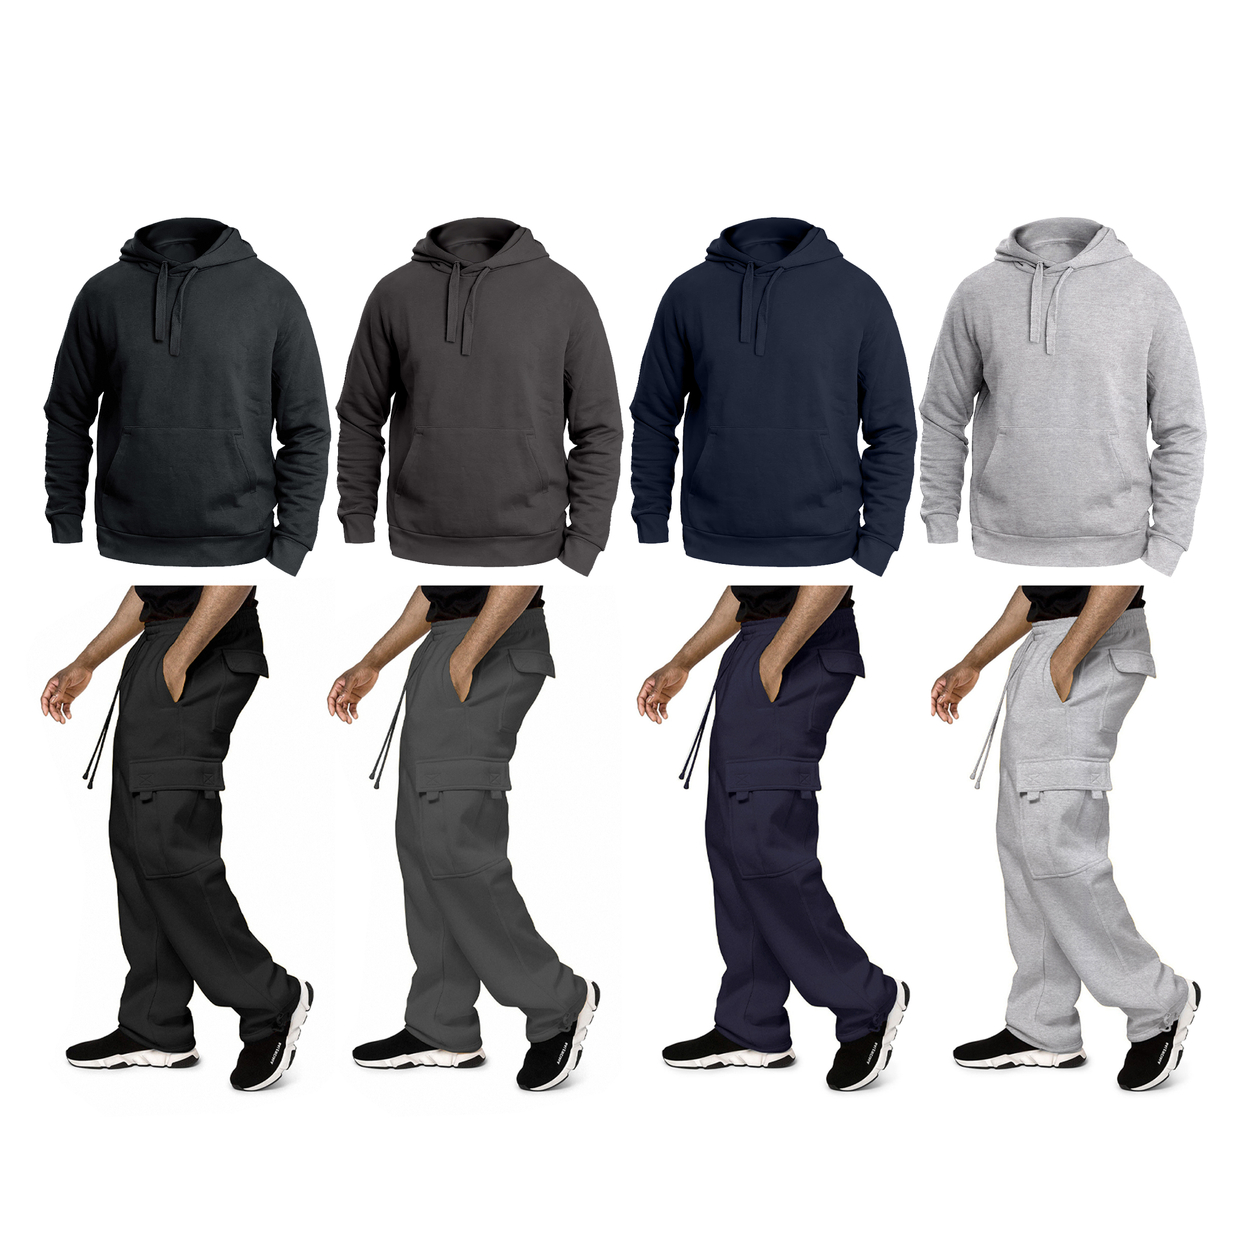 Multi-Pack: Big & Tall Men's Winter Warm Cozy Athletic Fleece Lined Multi-Pocket Cargo Sweatsuit - Navy, 1-pack, Xx-large